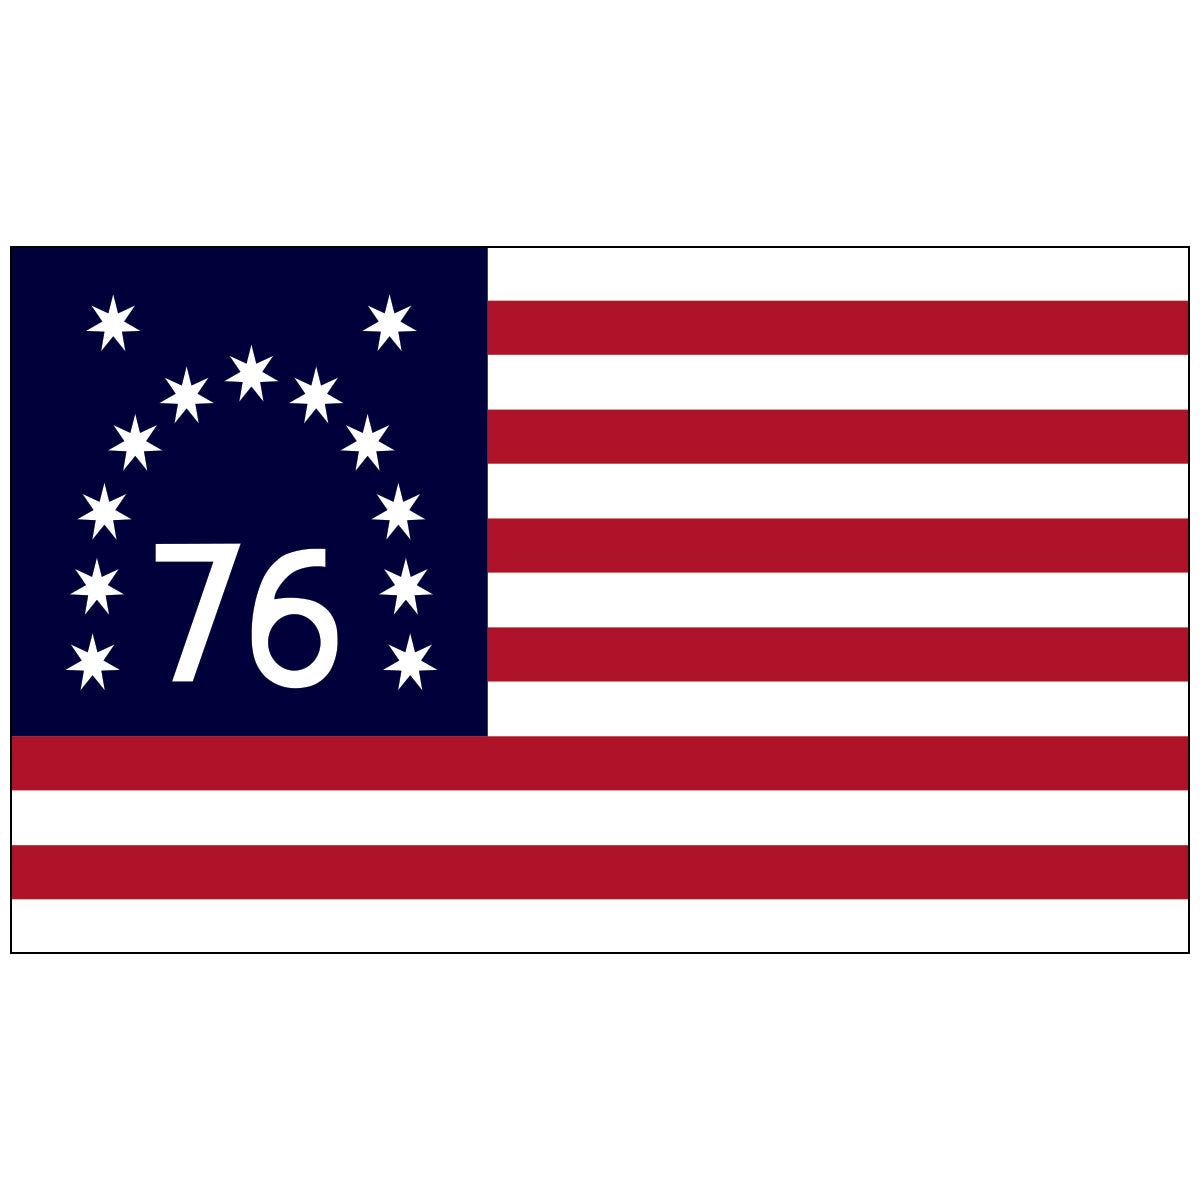 Bennington-historical-flag-red-white-blue-13-stars-13-stripes-Flagsource-Southeast-Woodstock-Ga